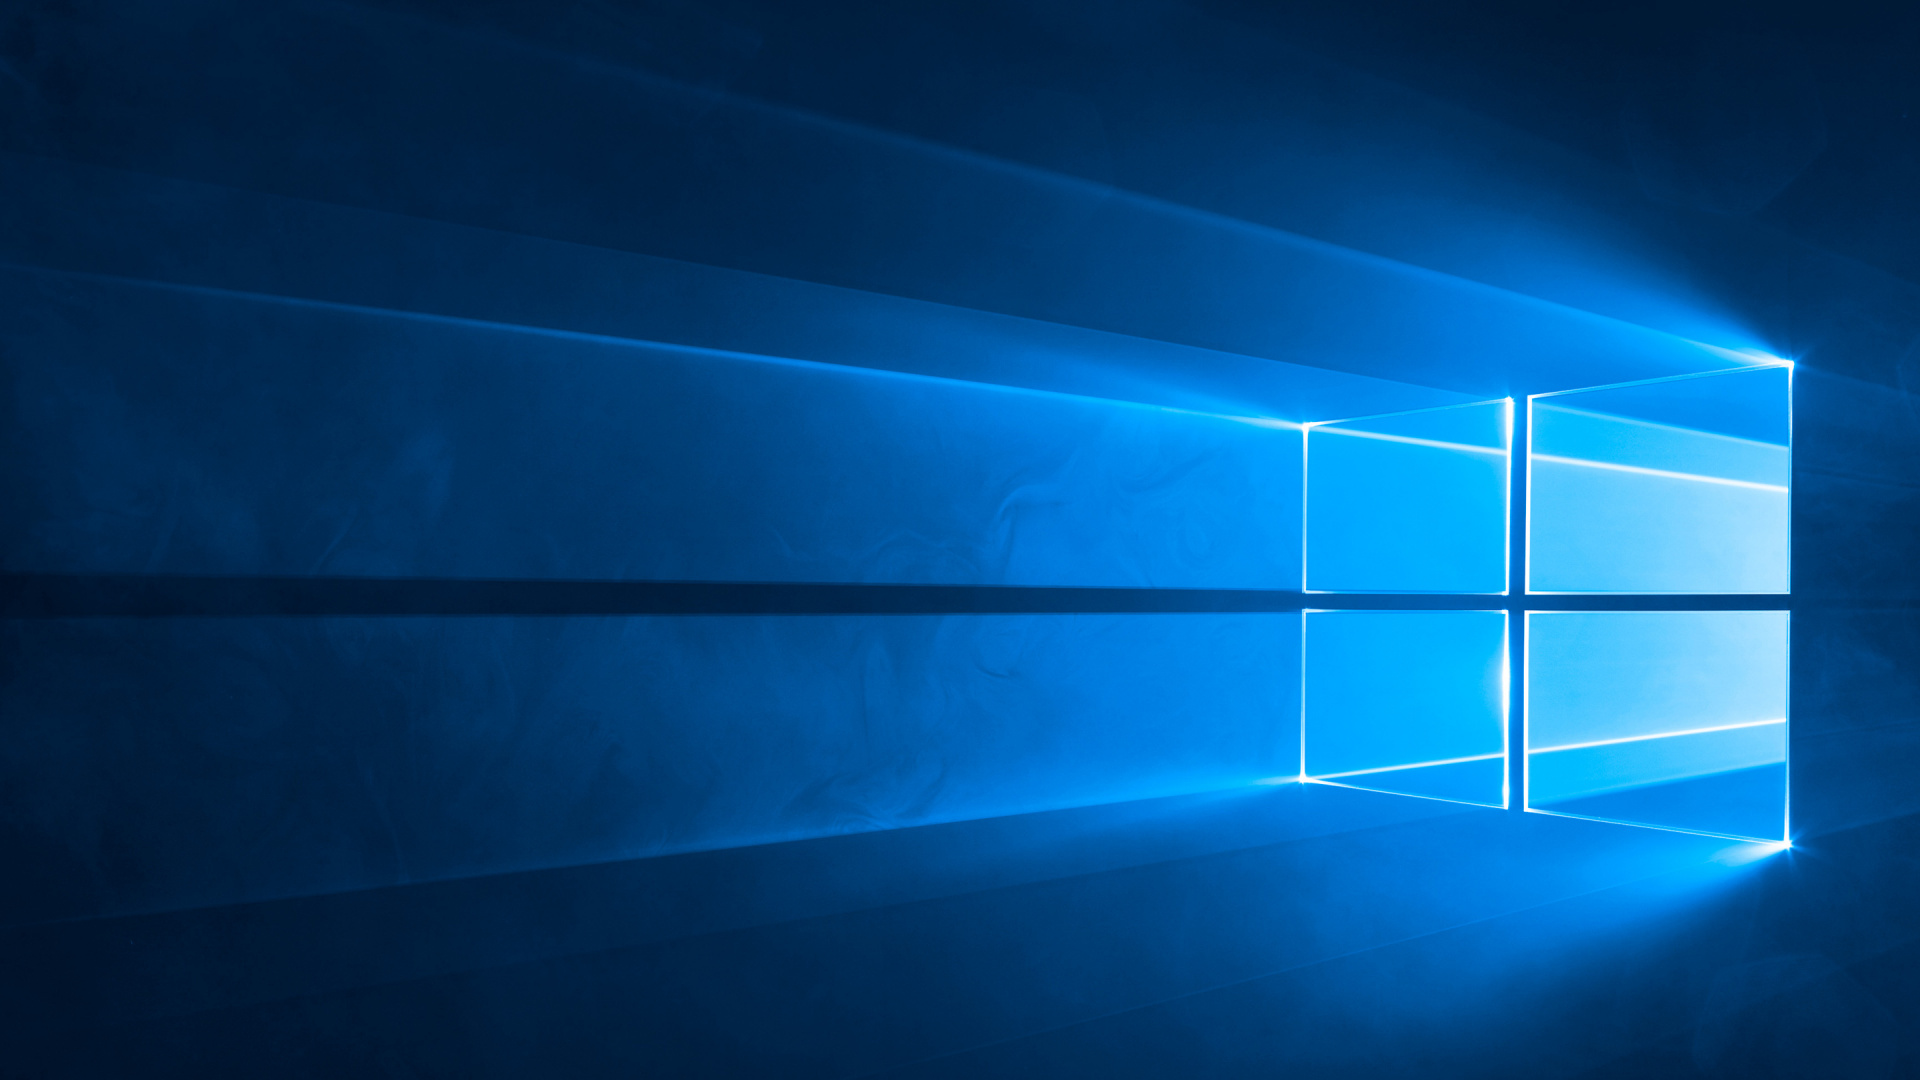 Windows10, Microsoft Windows, 微软公司, 视窗 10 S, 光 壁纸 1920x1080 允许